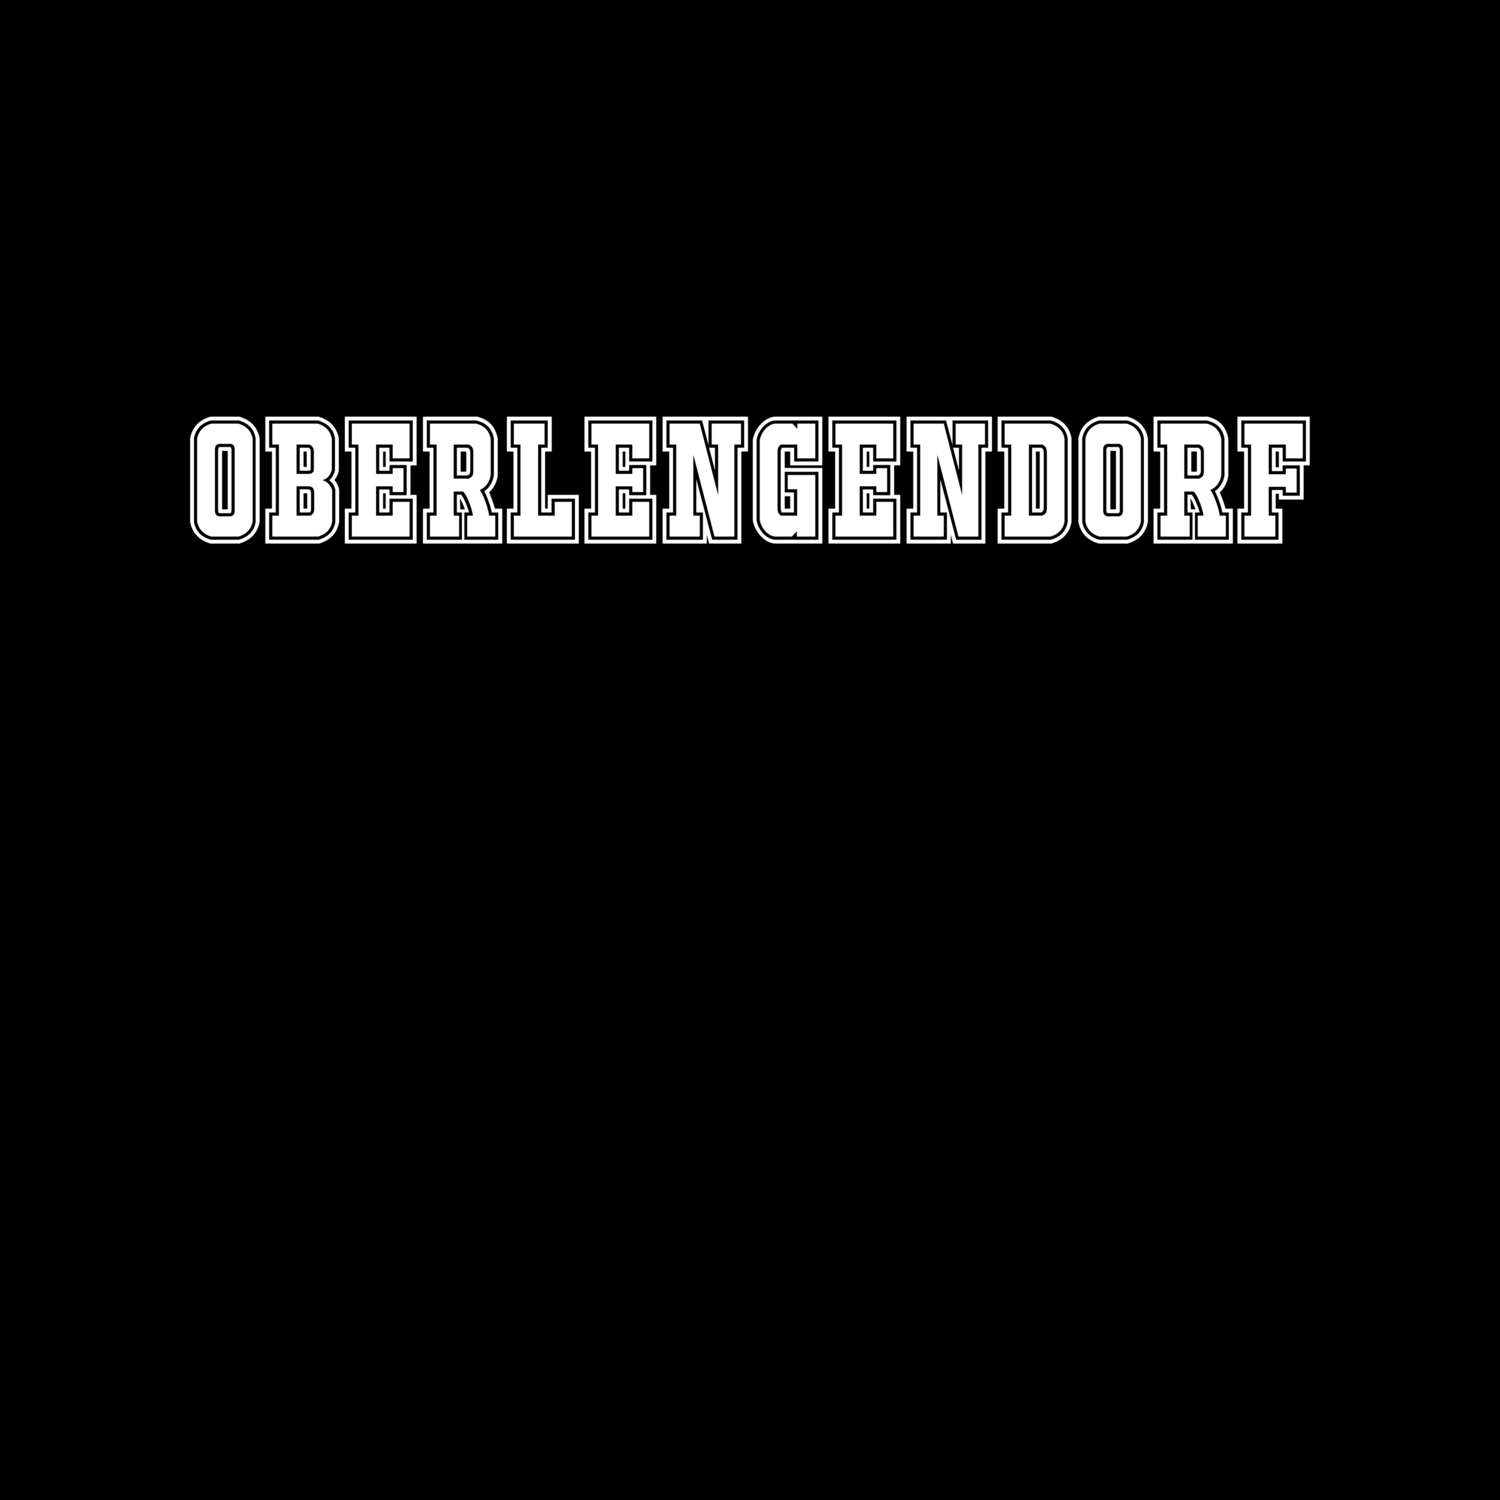 Oberlengendorf T-Shirt »Classic«